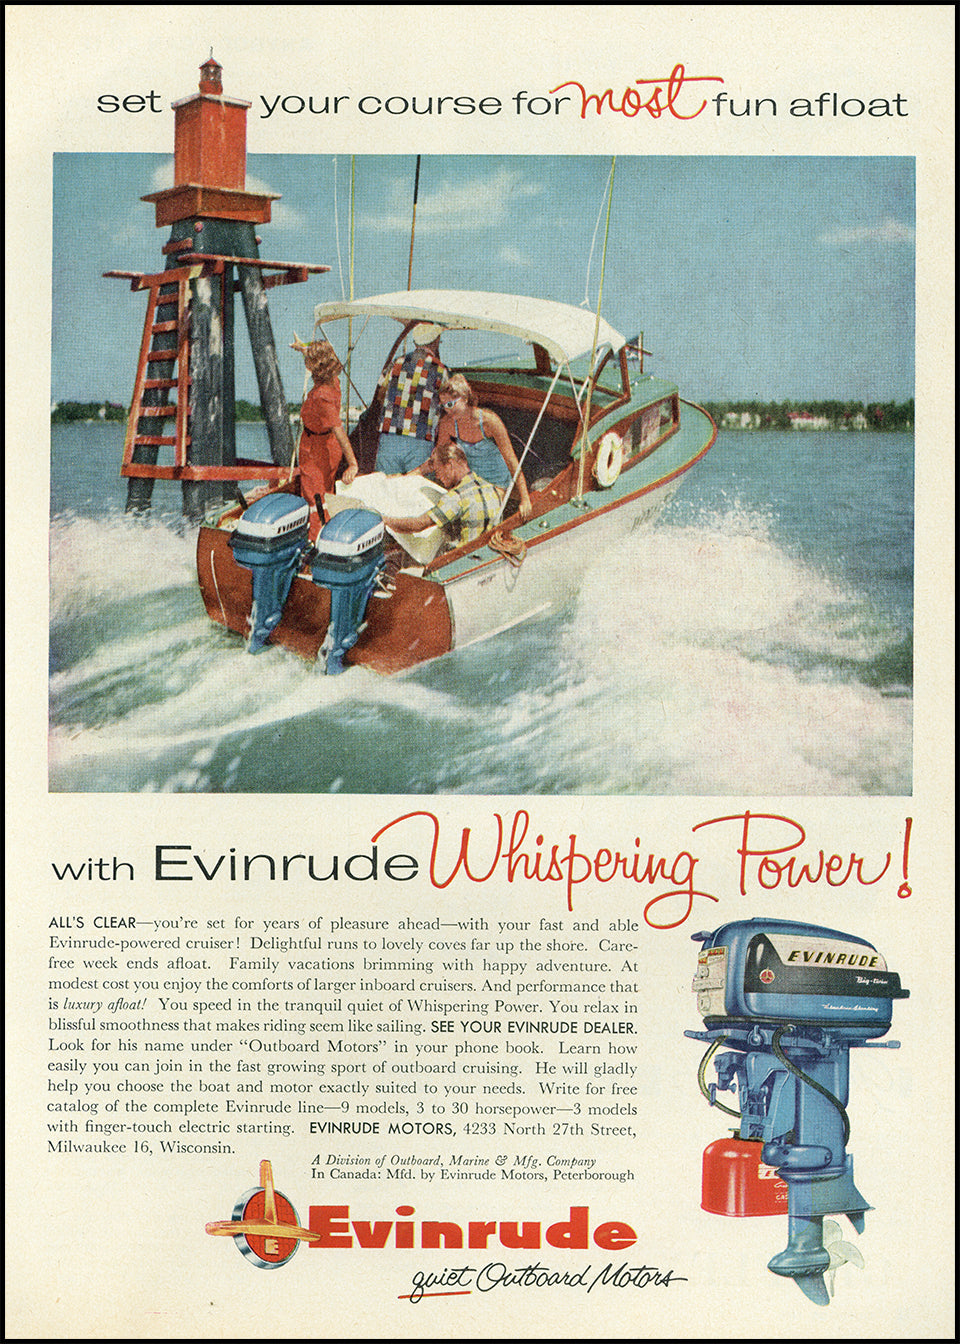 Original & Authentic Vintage Boating & Marine Ads at Adirondack Retro